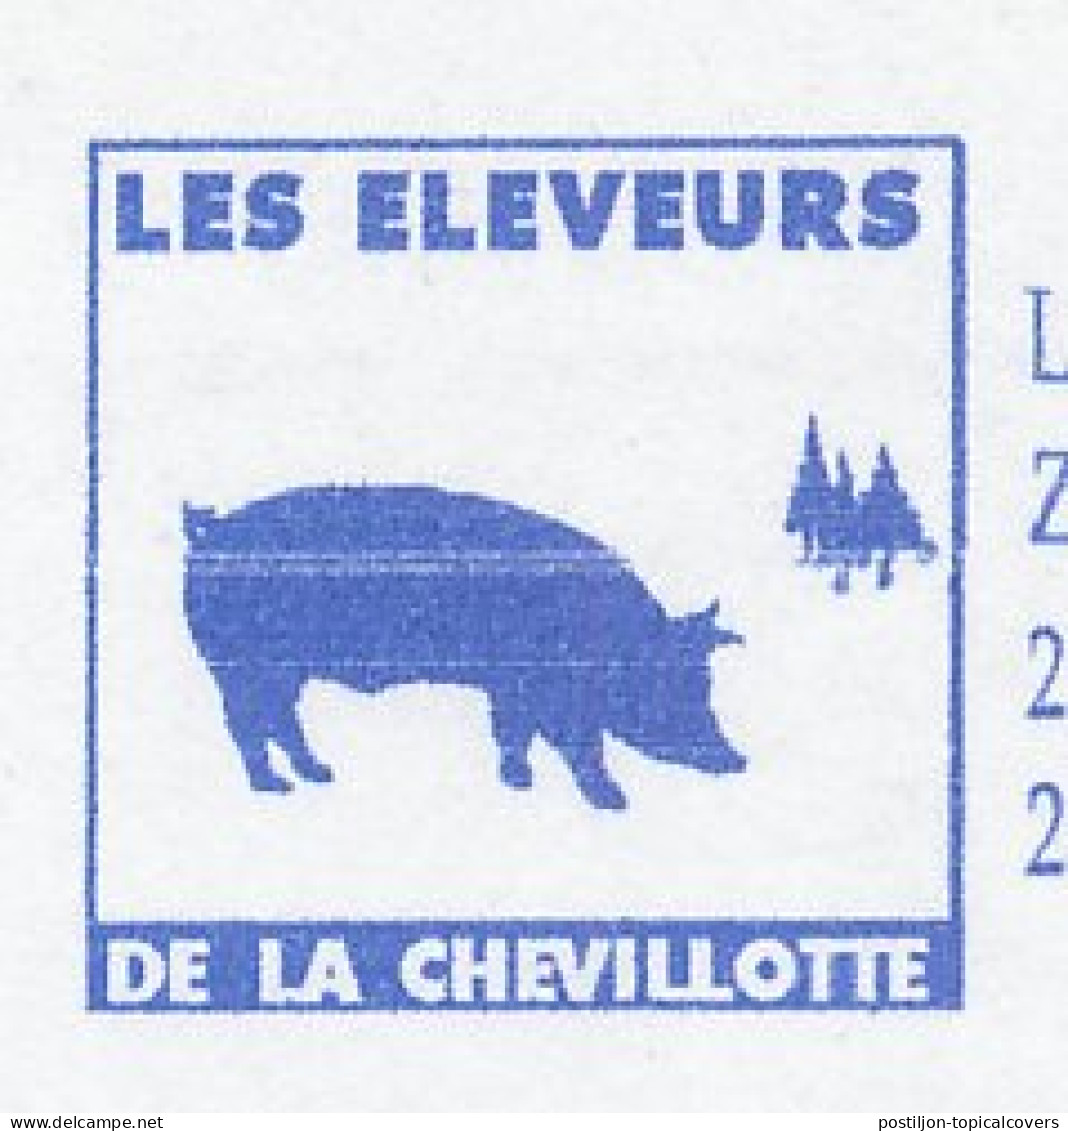 Meter Cut France 2005 Pig - Fattoria